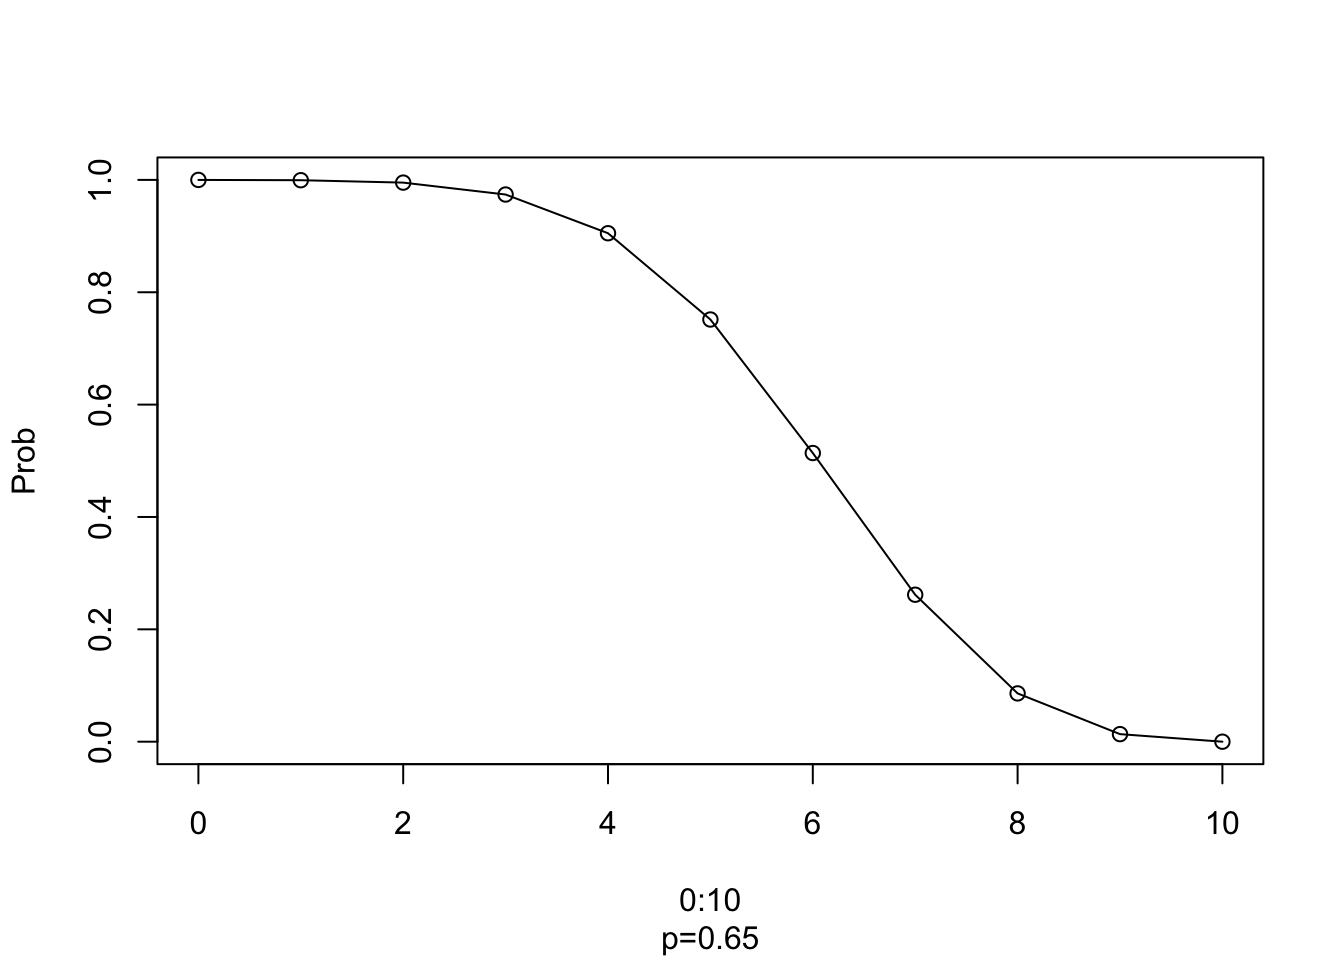 Plot de la distribucion binomial, para n = 0:10;  x = 10, p = 0.65.